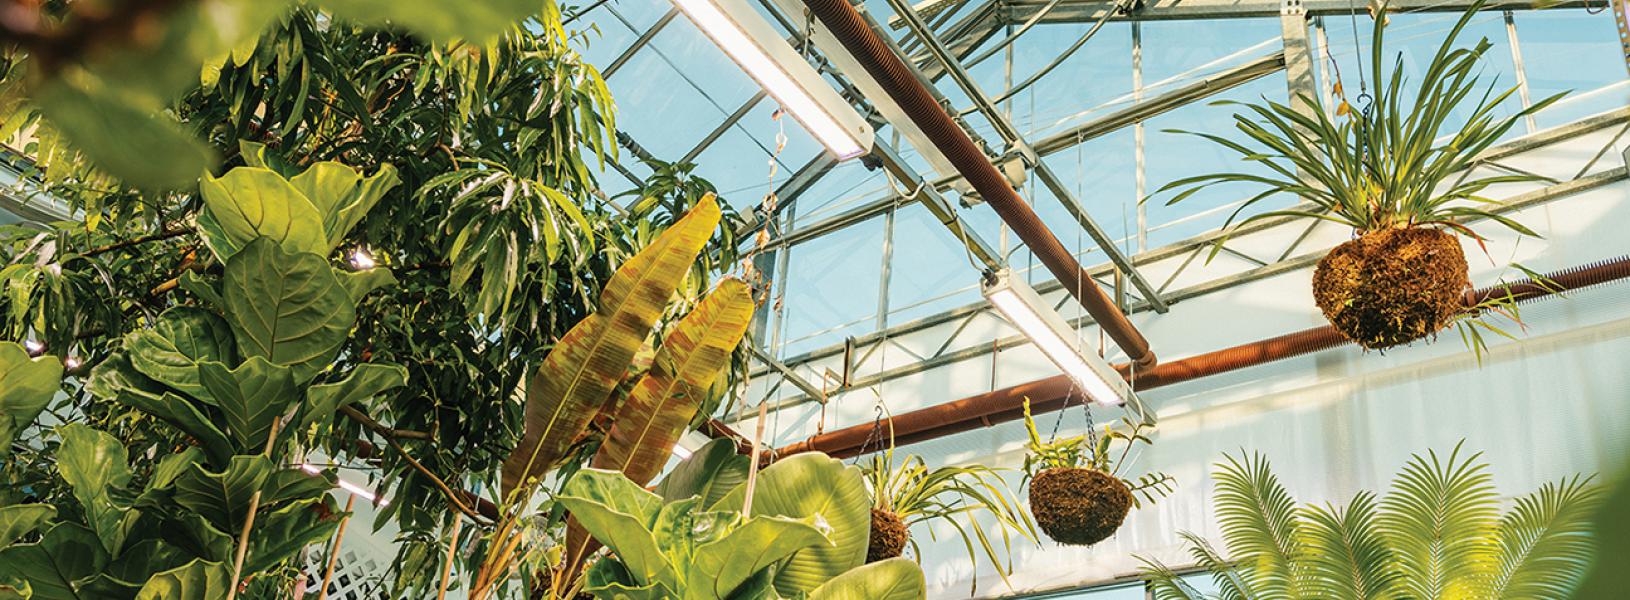 Plants hang inside the Biosciences Complex